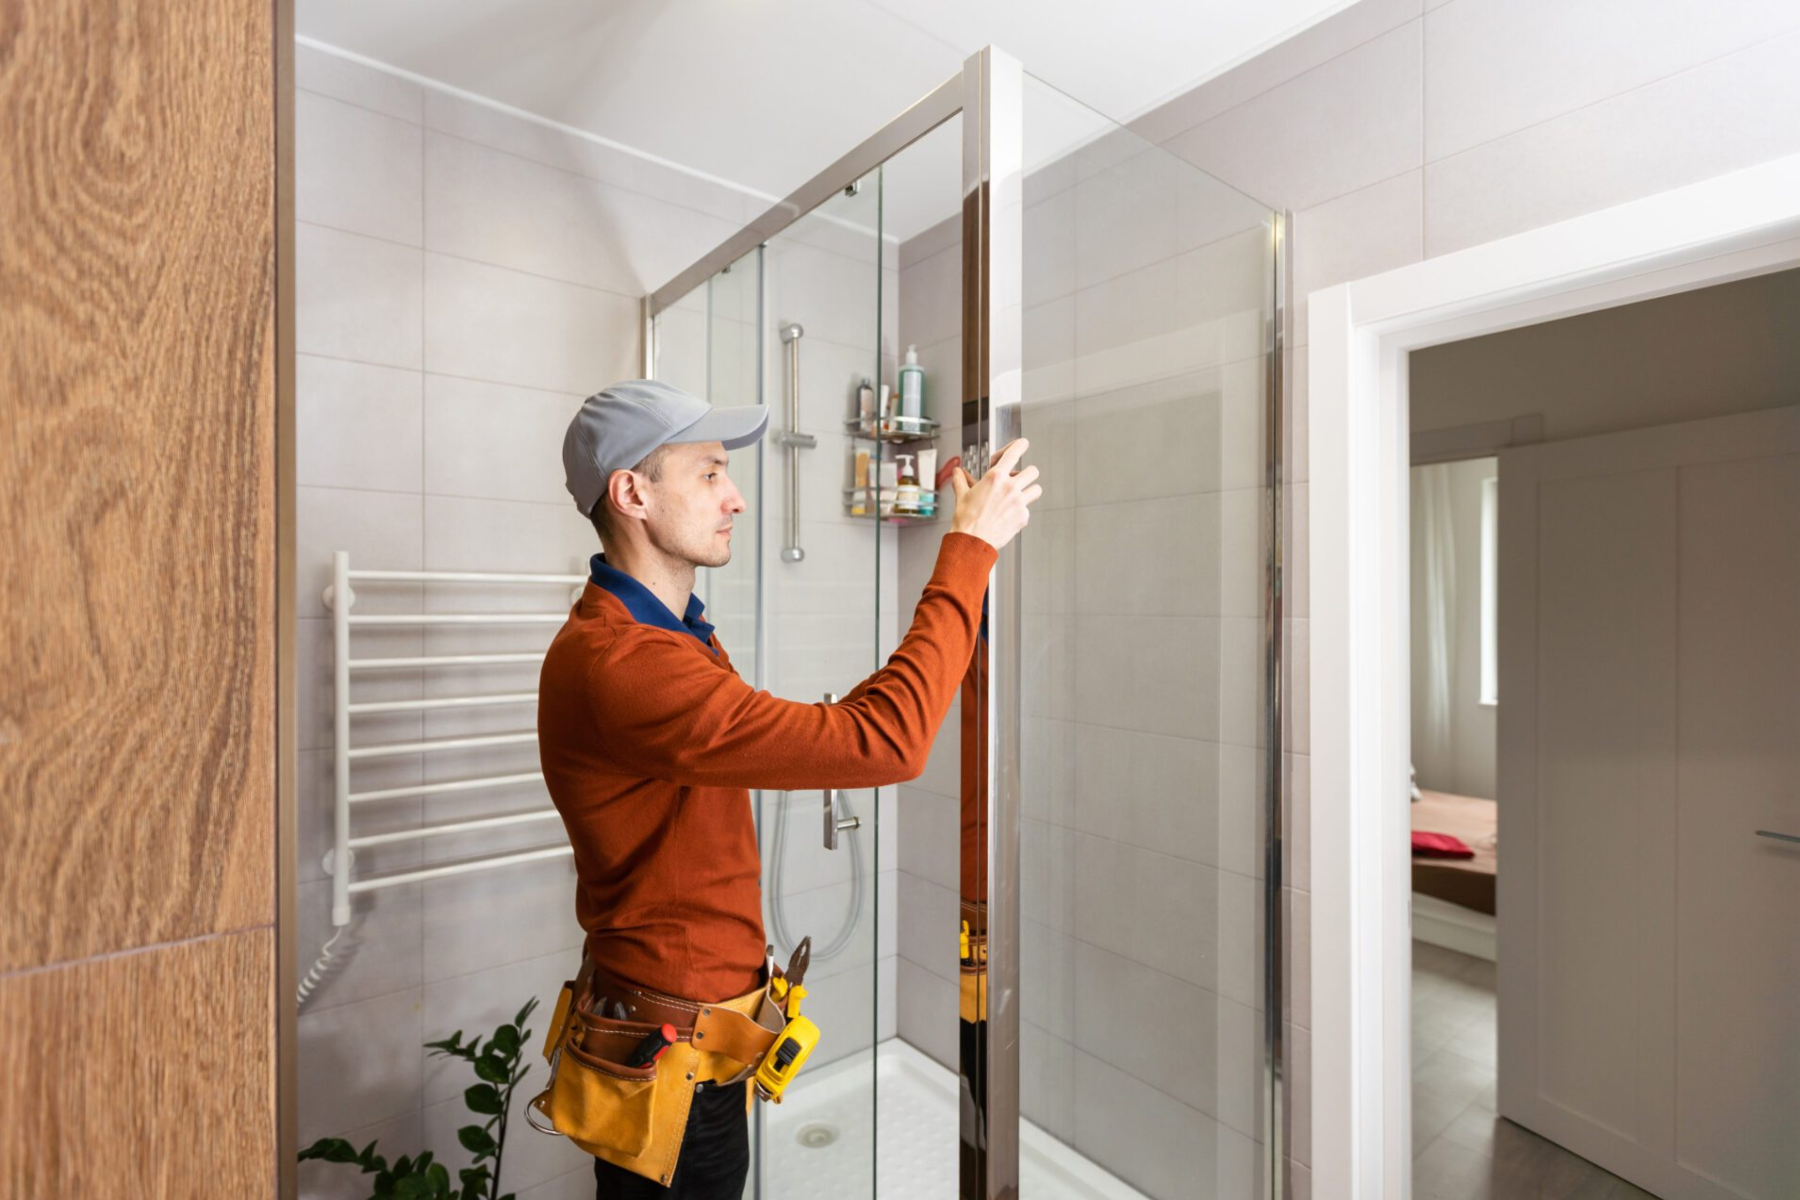 Man Installing Shower Enclosure In Modern Bathroom Space